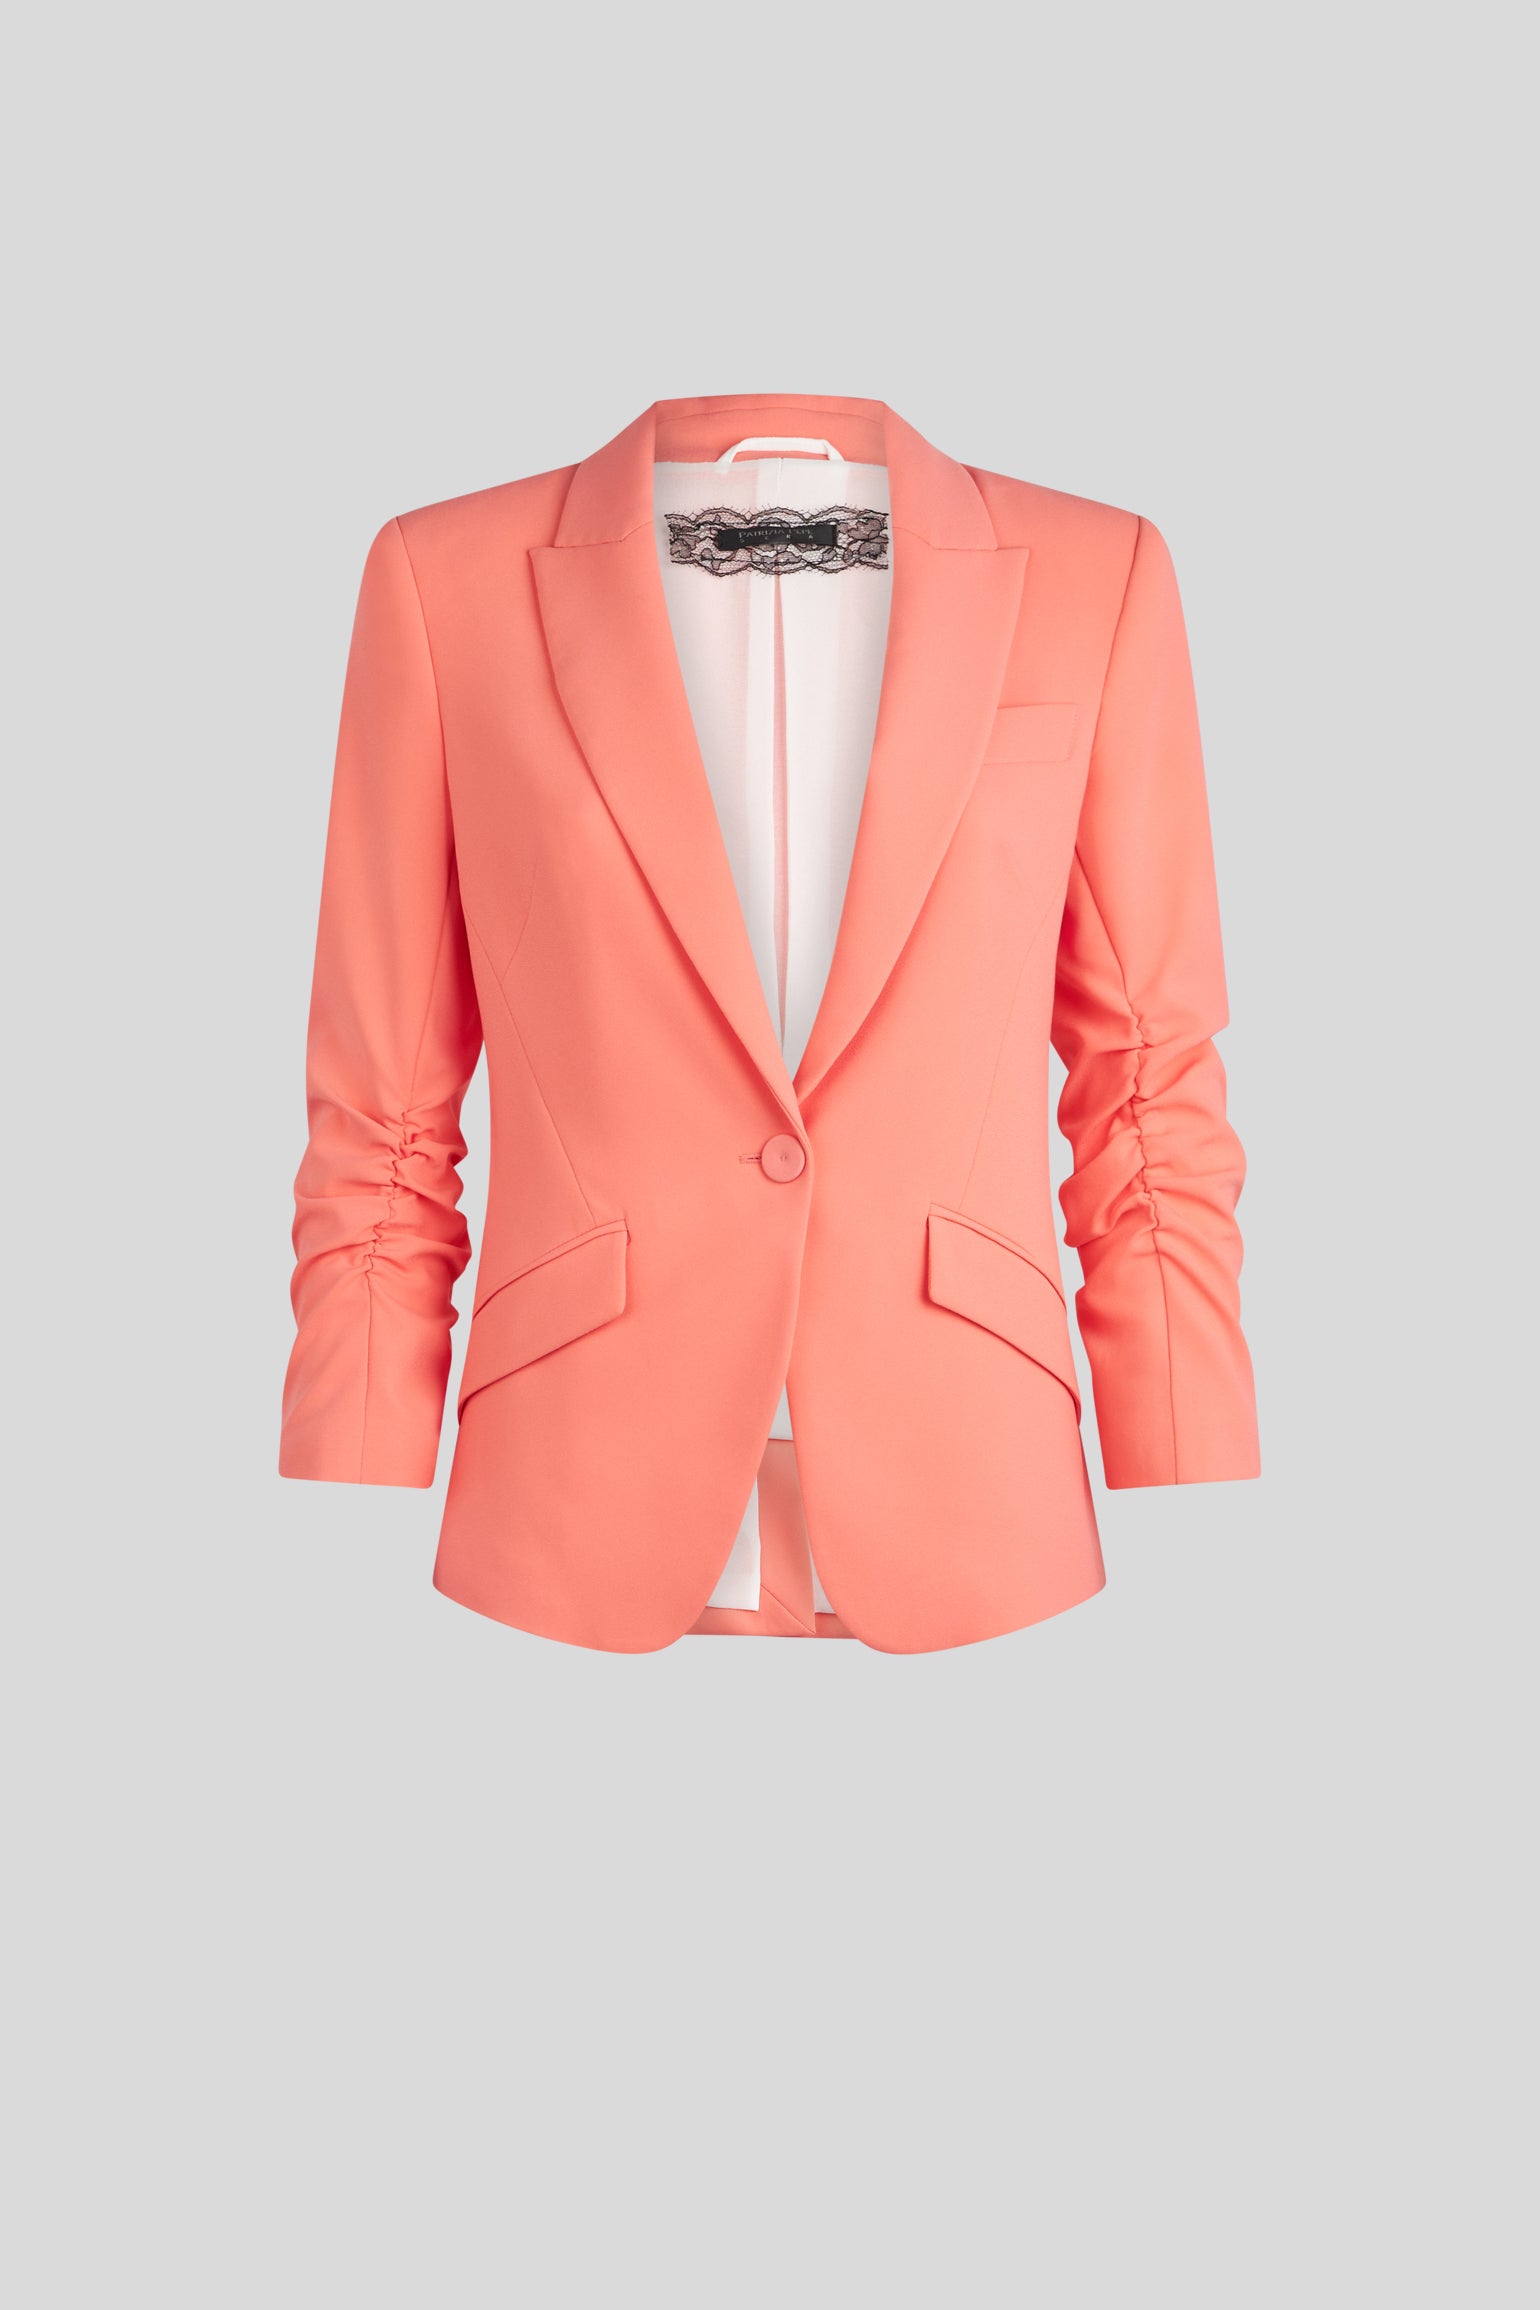 PATRIZIA PEPE Coral Pink Single-Breasted Blazer